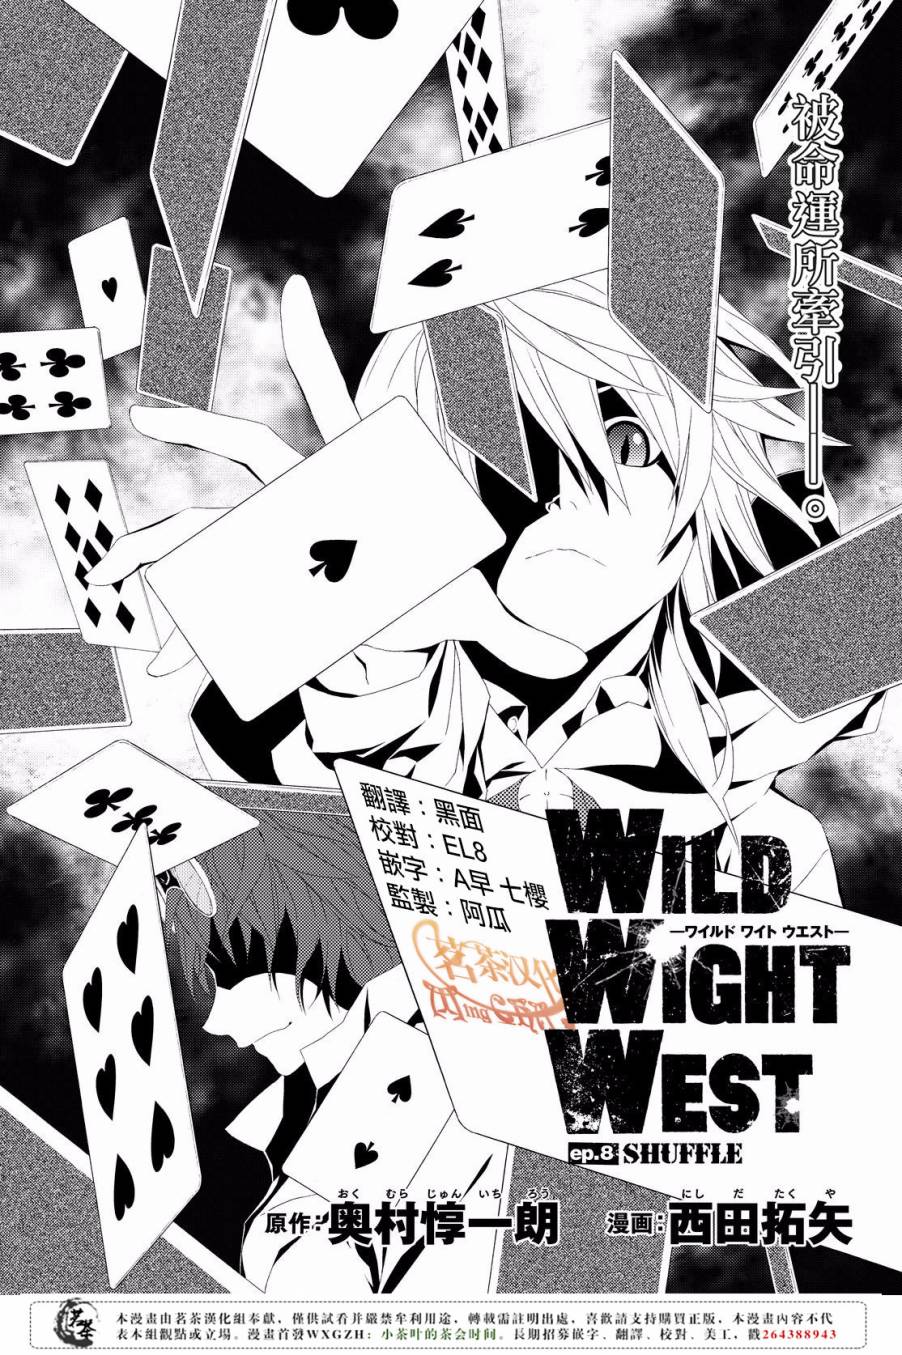 Wild Wight West 第08話 漫畫線上看 動漫戲說 Acgn Cc